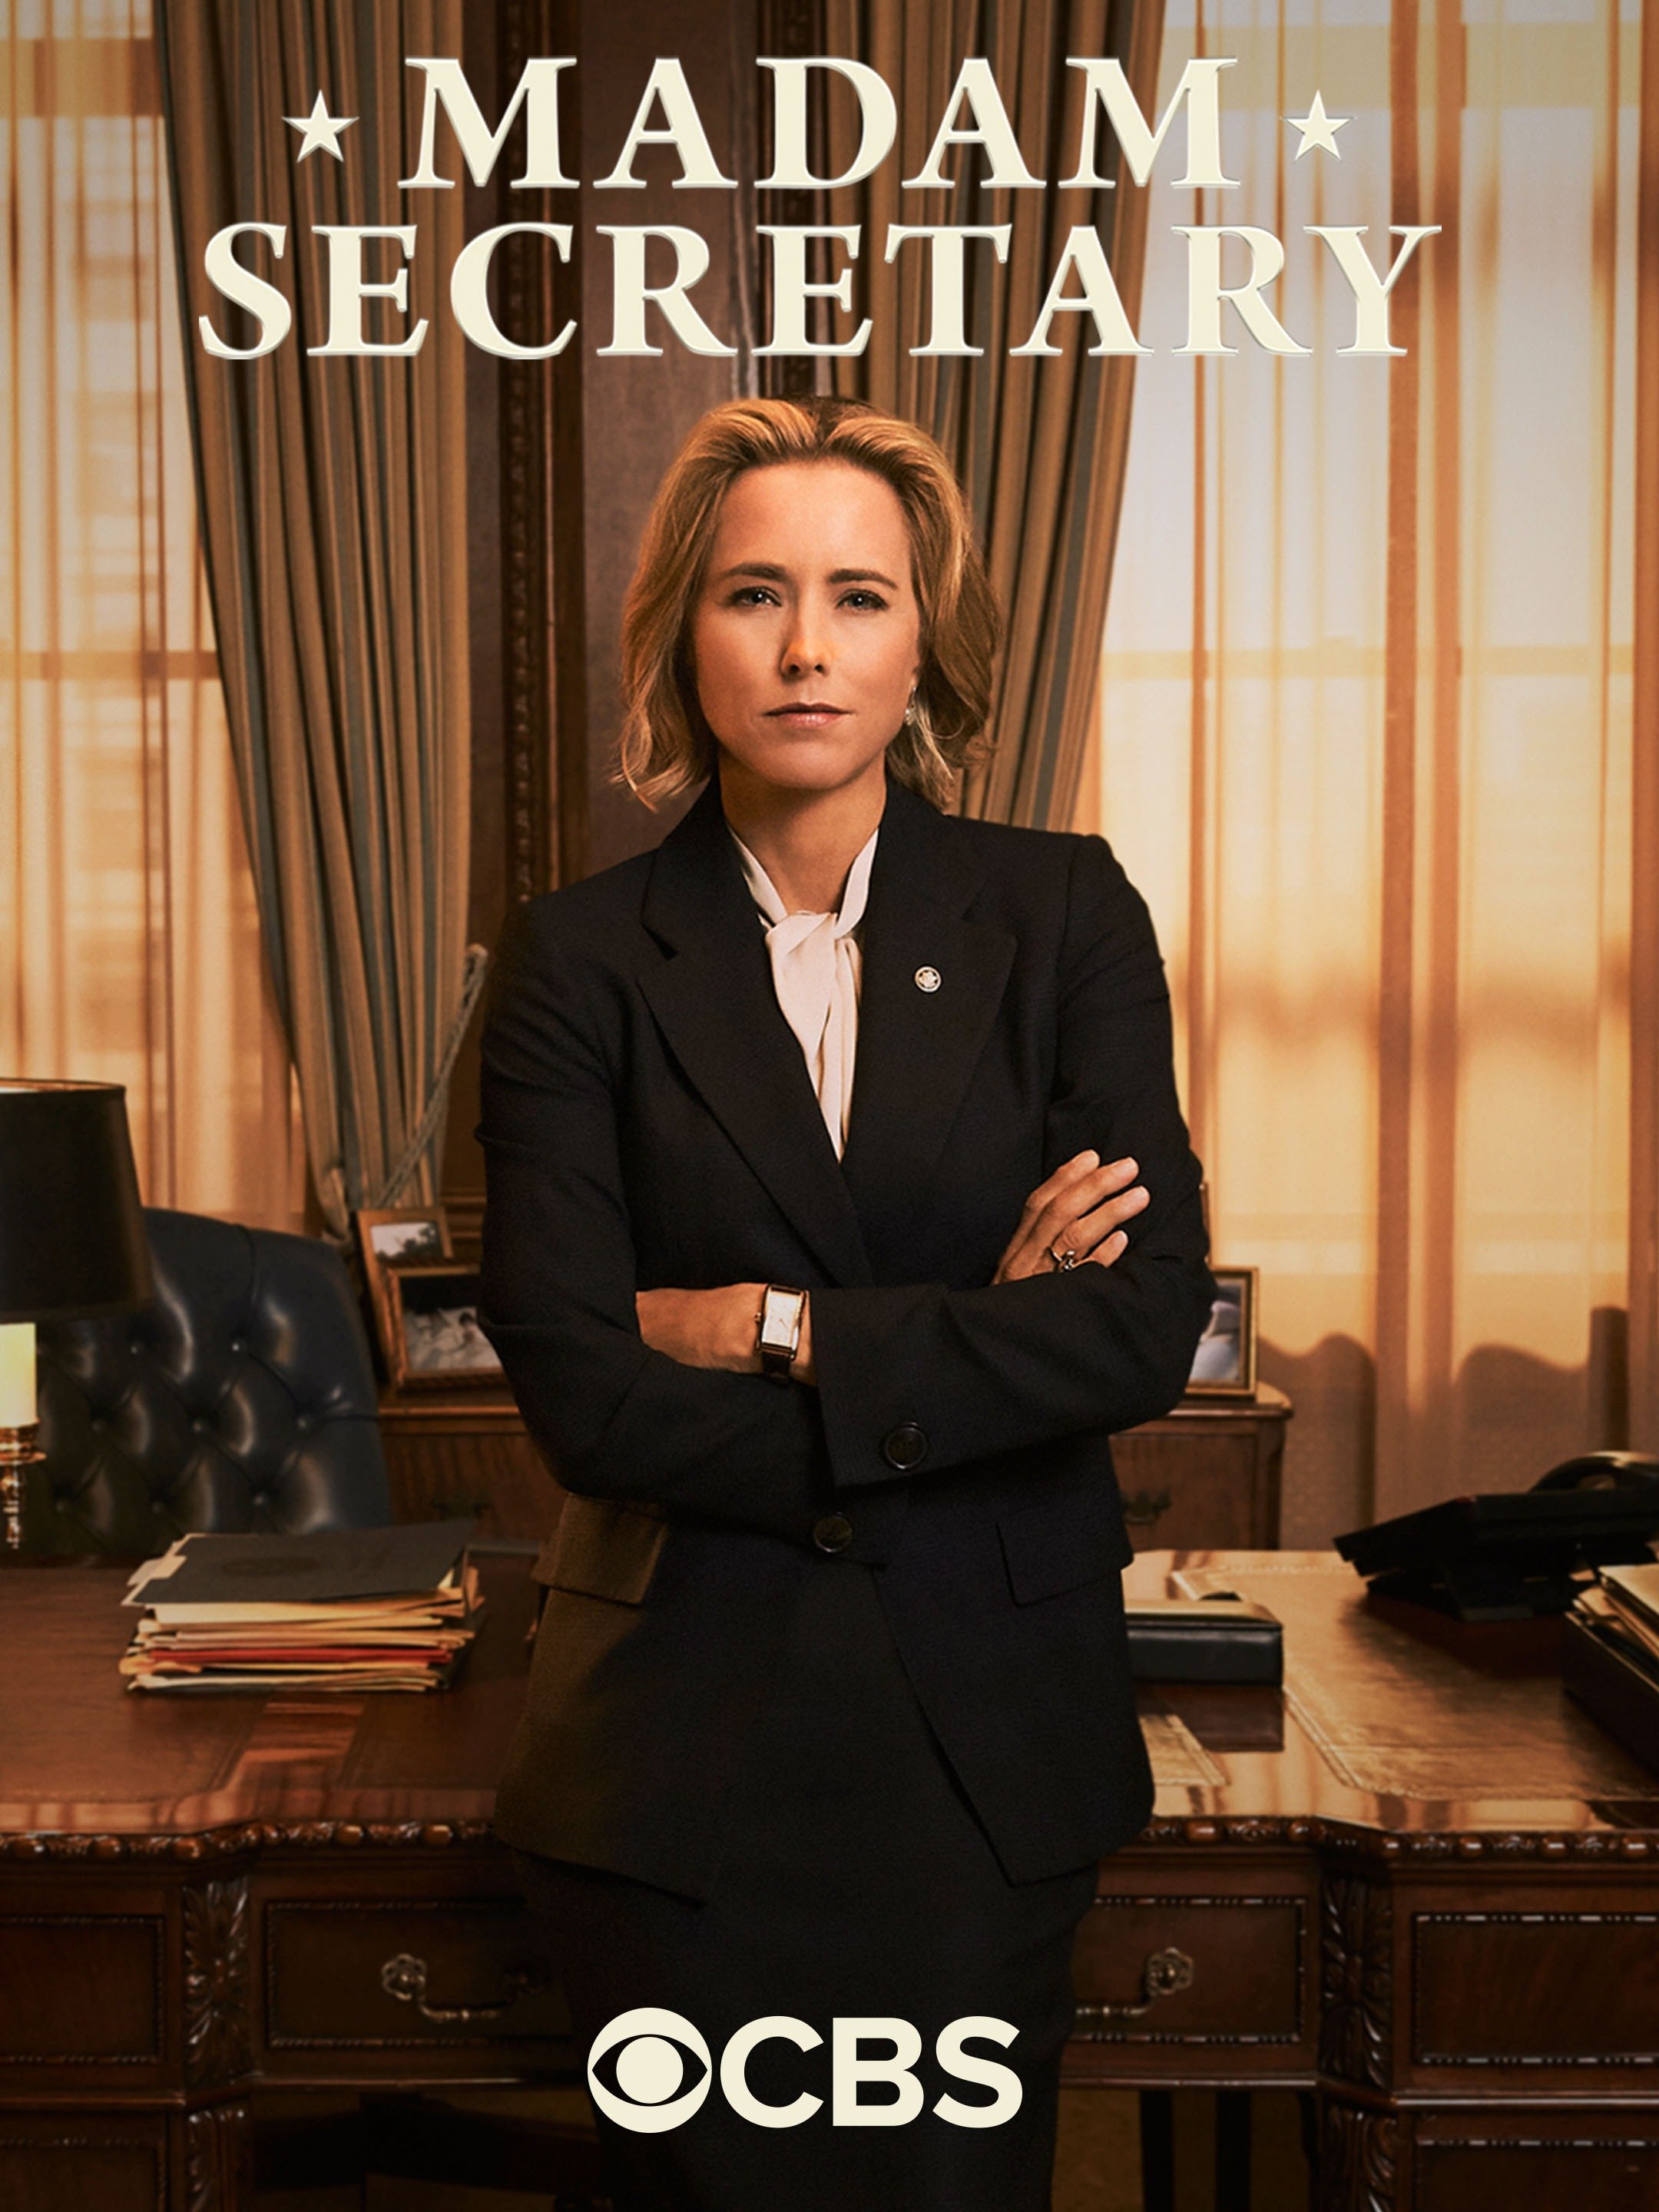 Madam Secretary Schedule 2022 Madam Secretary - Rotten Tomatoes